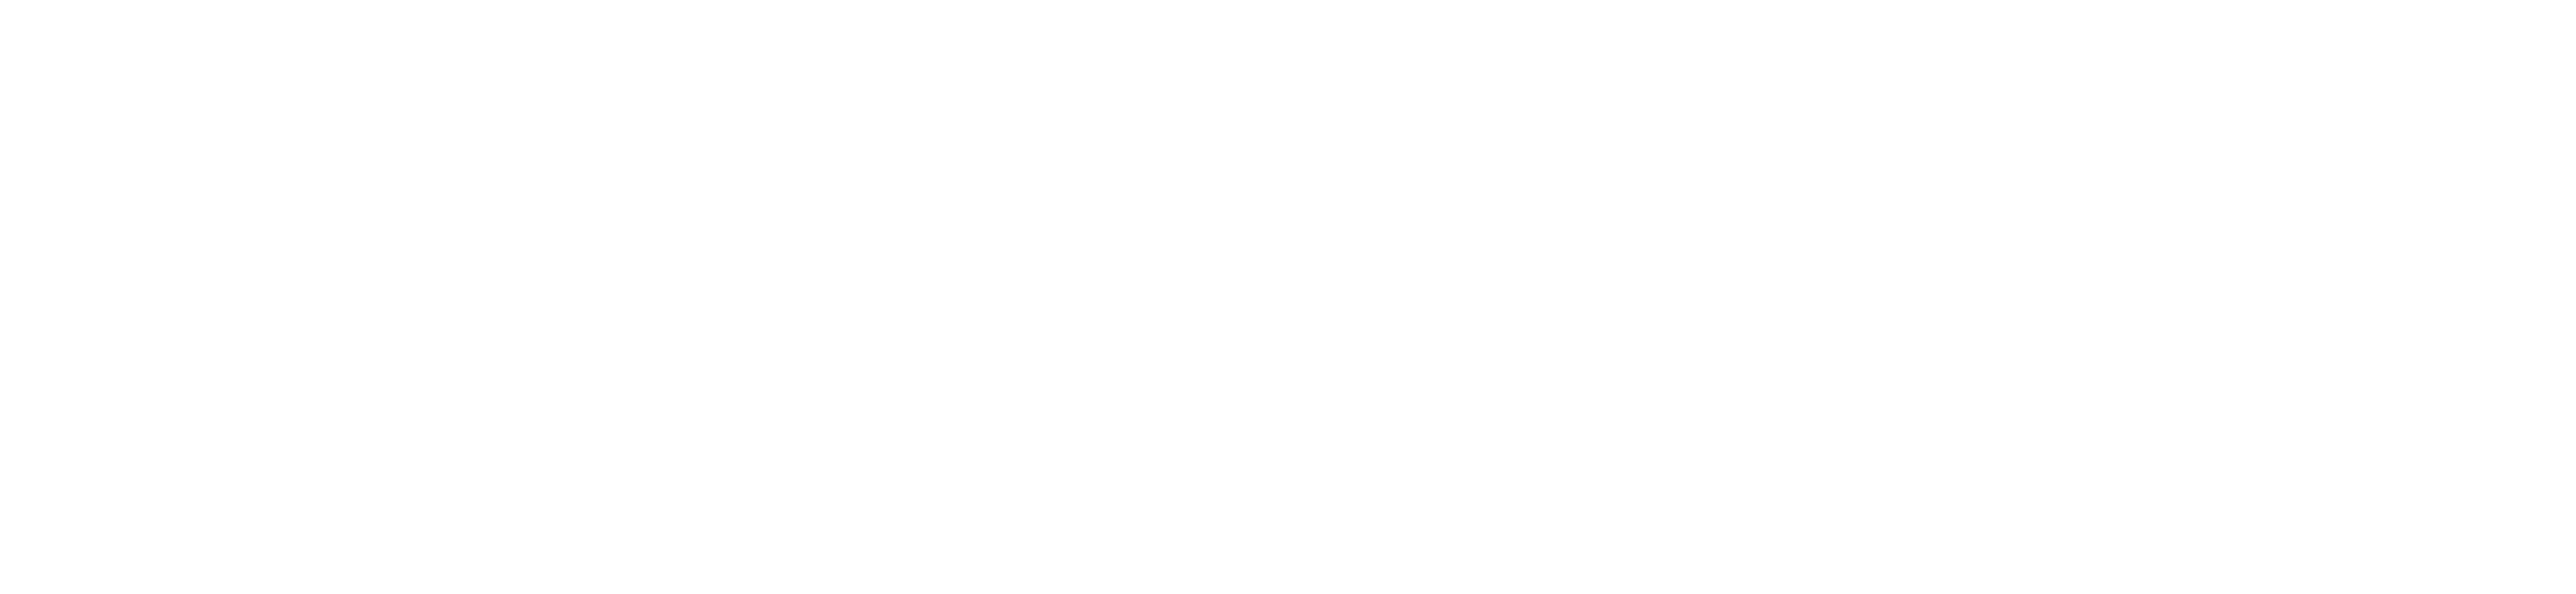 Dr. Tarr&#x27;s Torture Dungeon